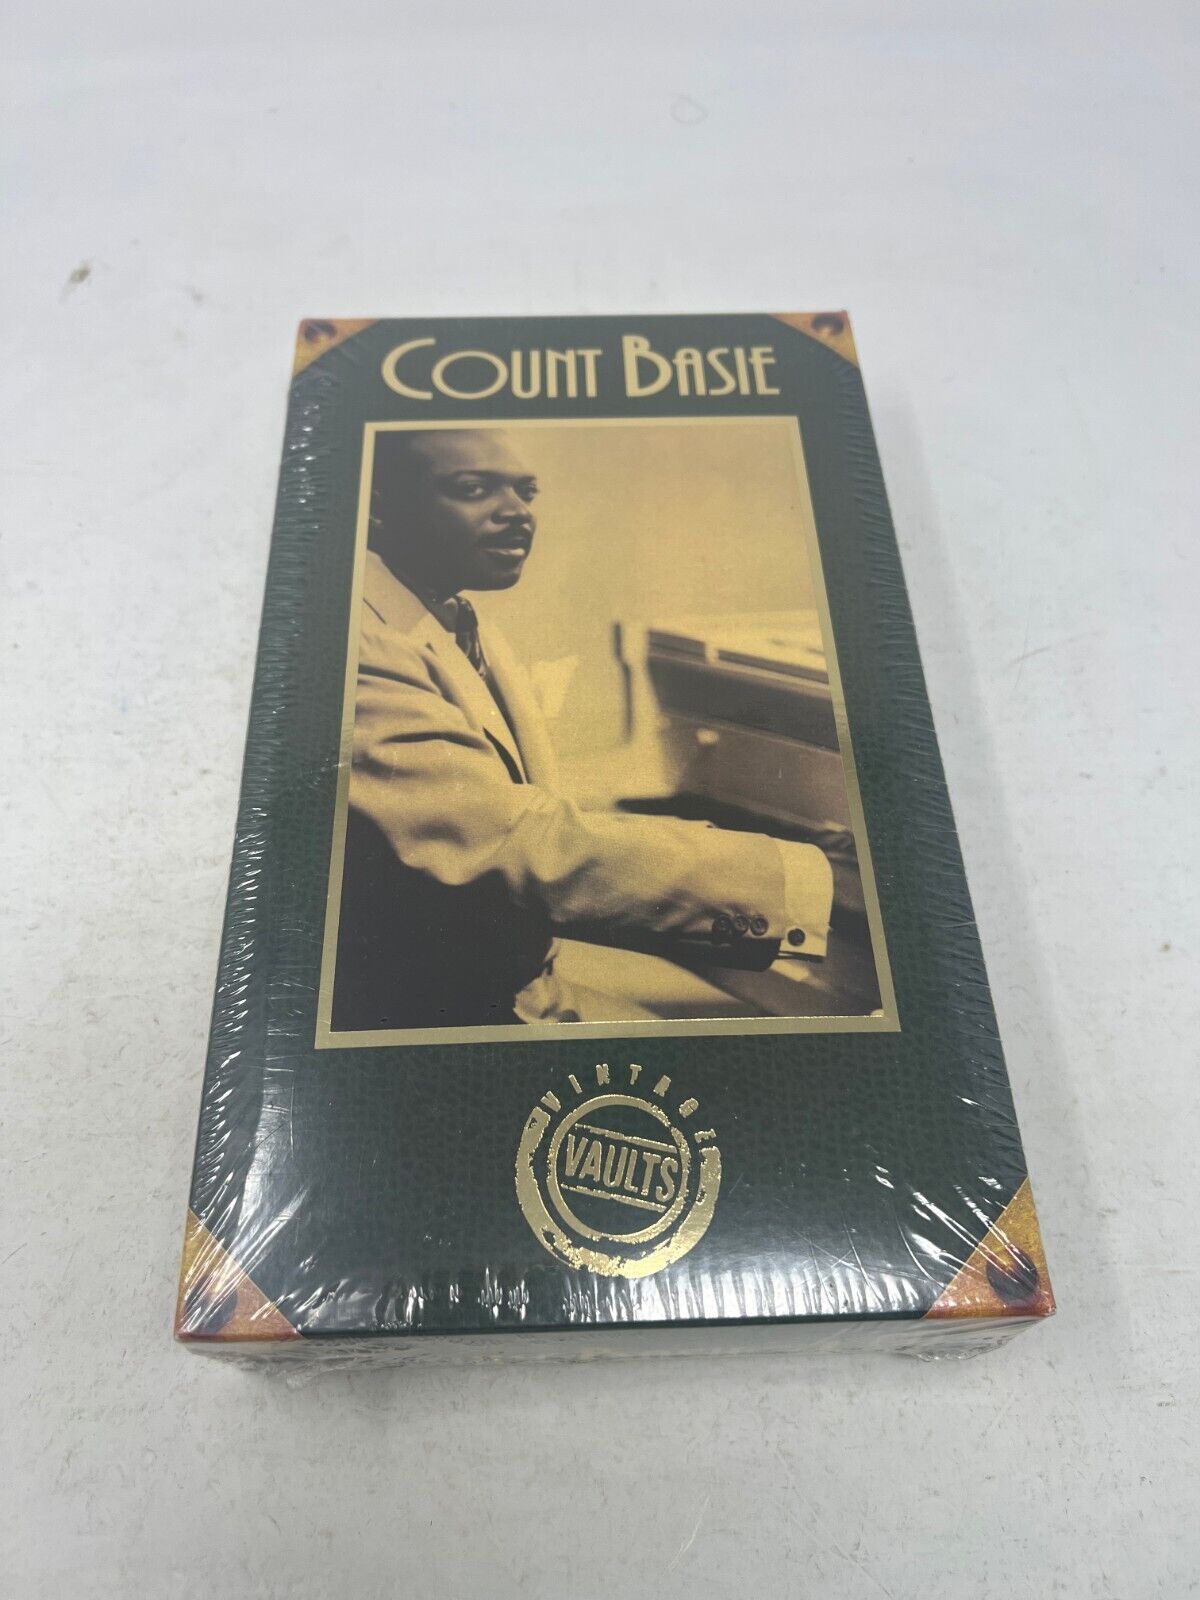 Count Basie - Vintage Vaults 4 CD Box Set - Jazz/Big Band/Orchestral - 